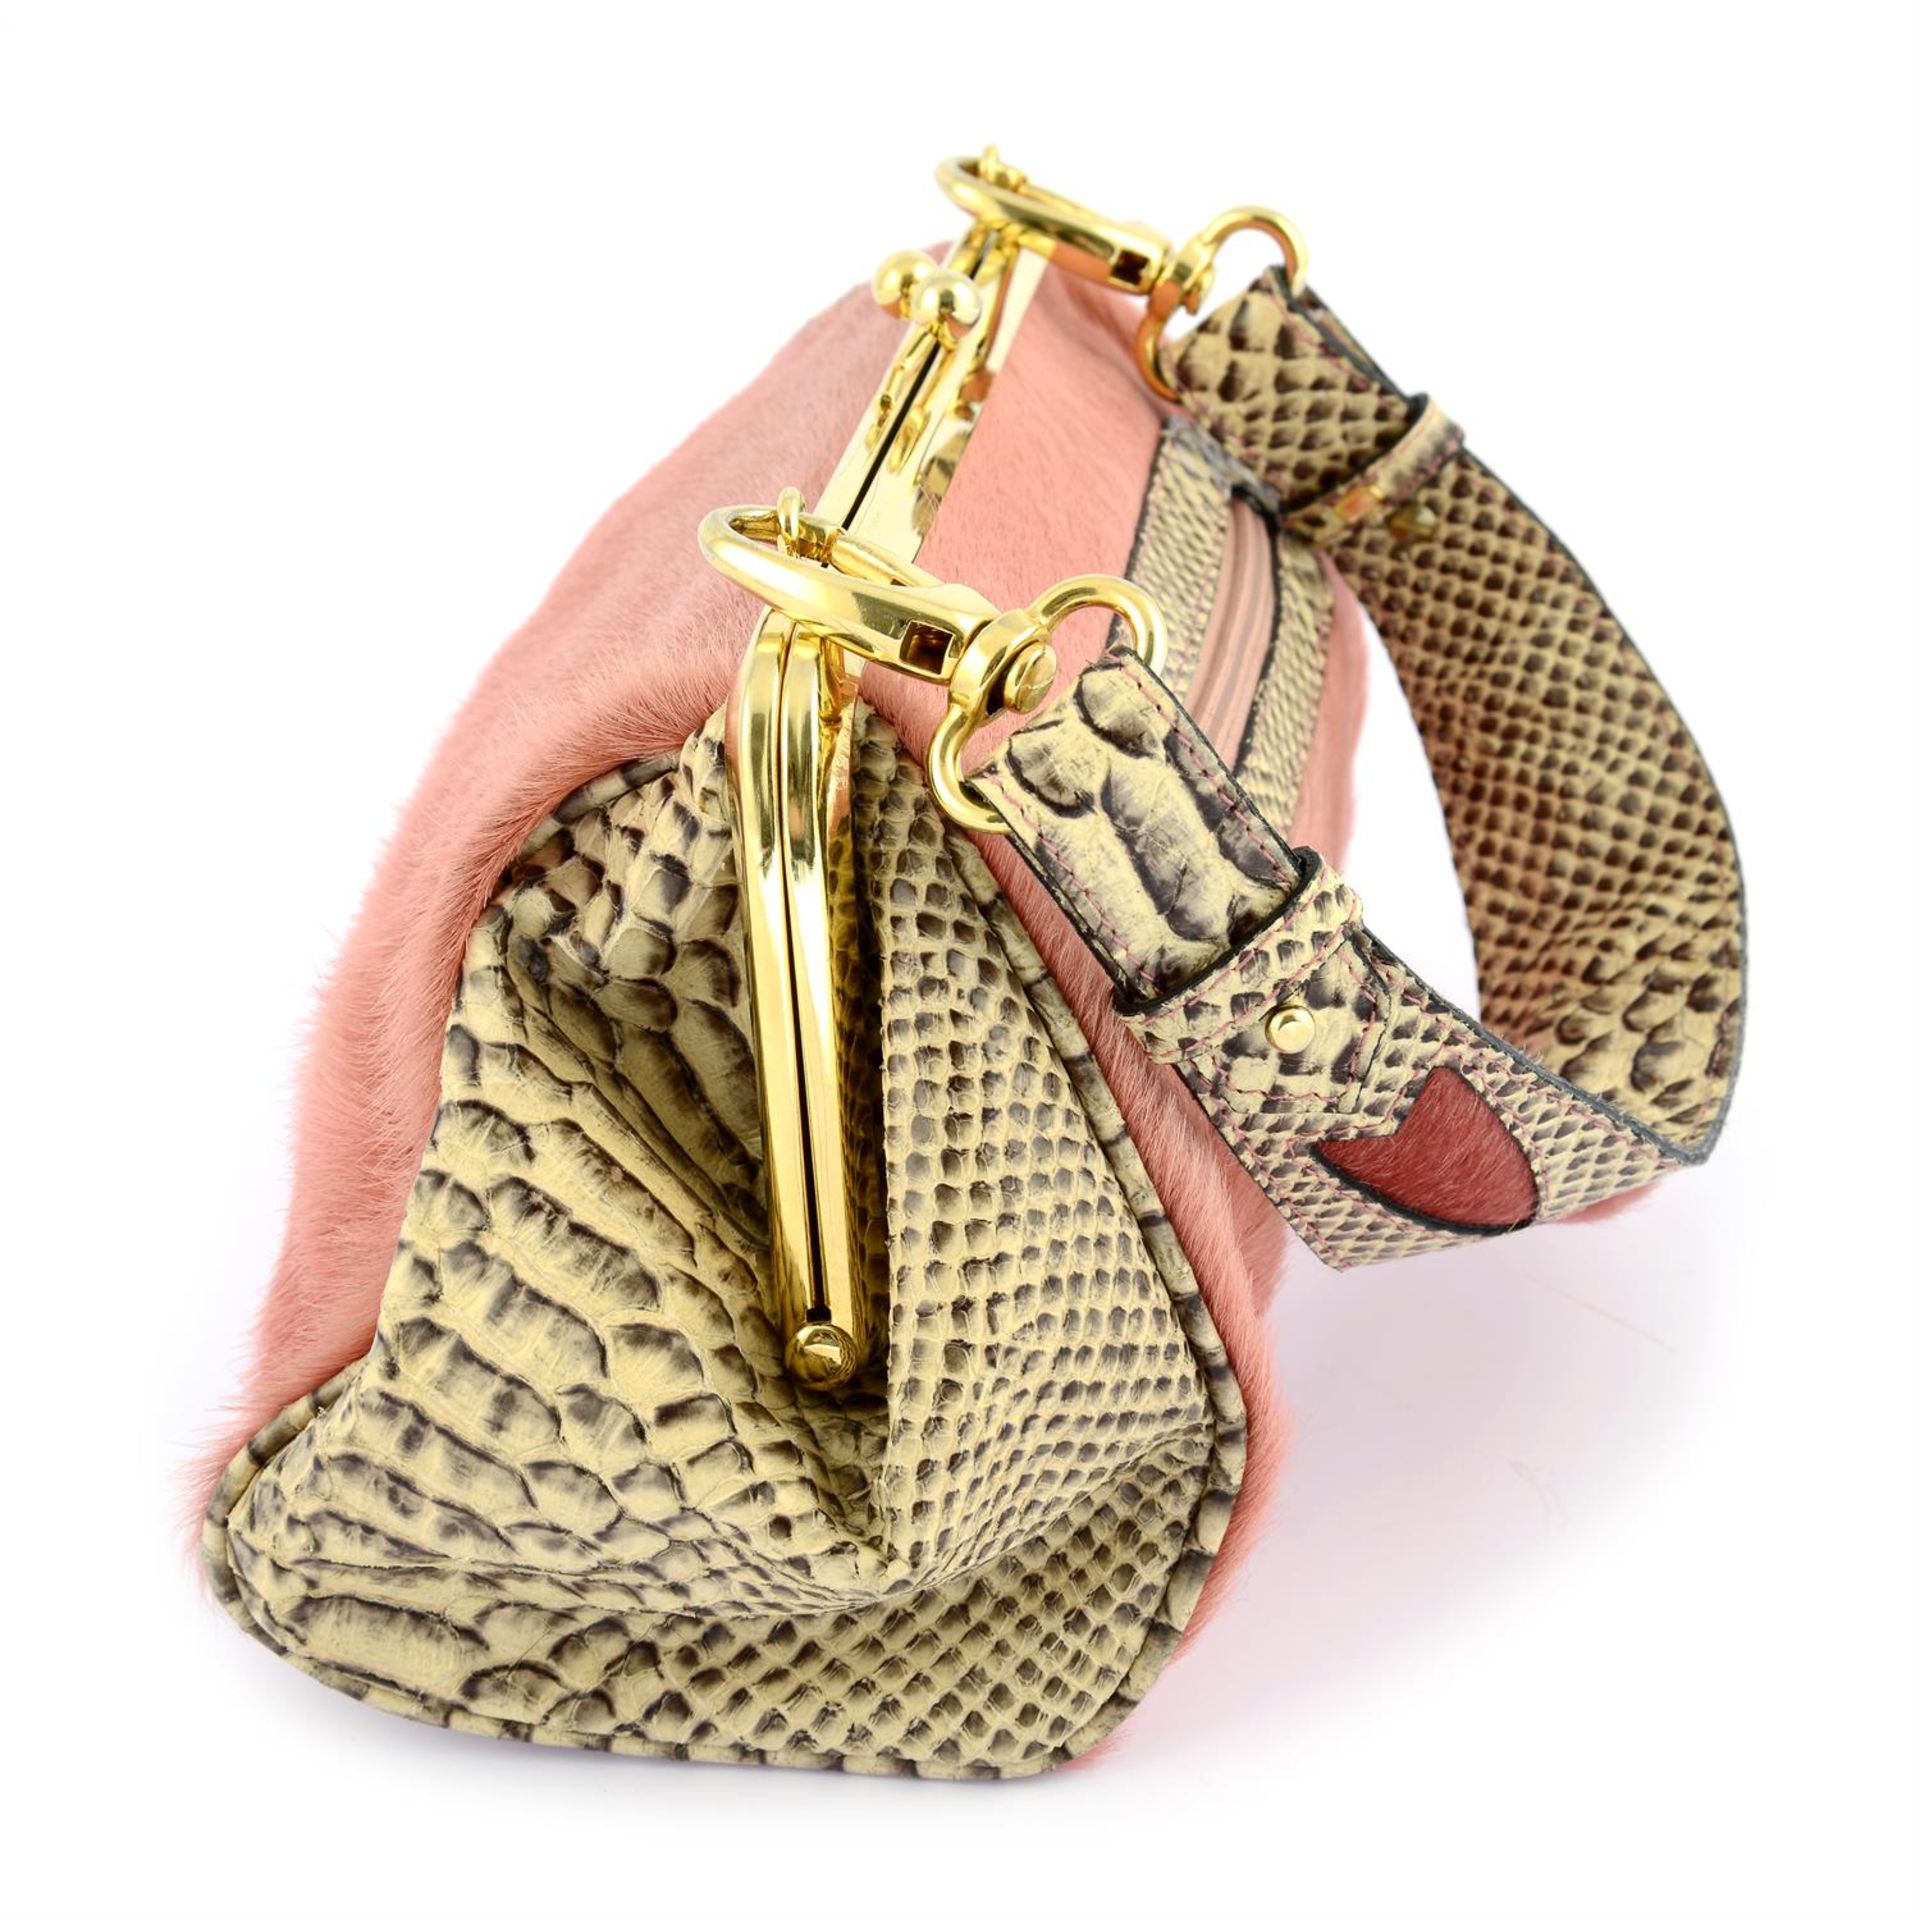 BERGE - a pink pony fur and snakes skin handbag. - Image 3 of 5